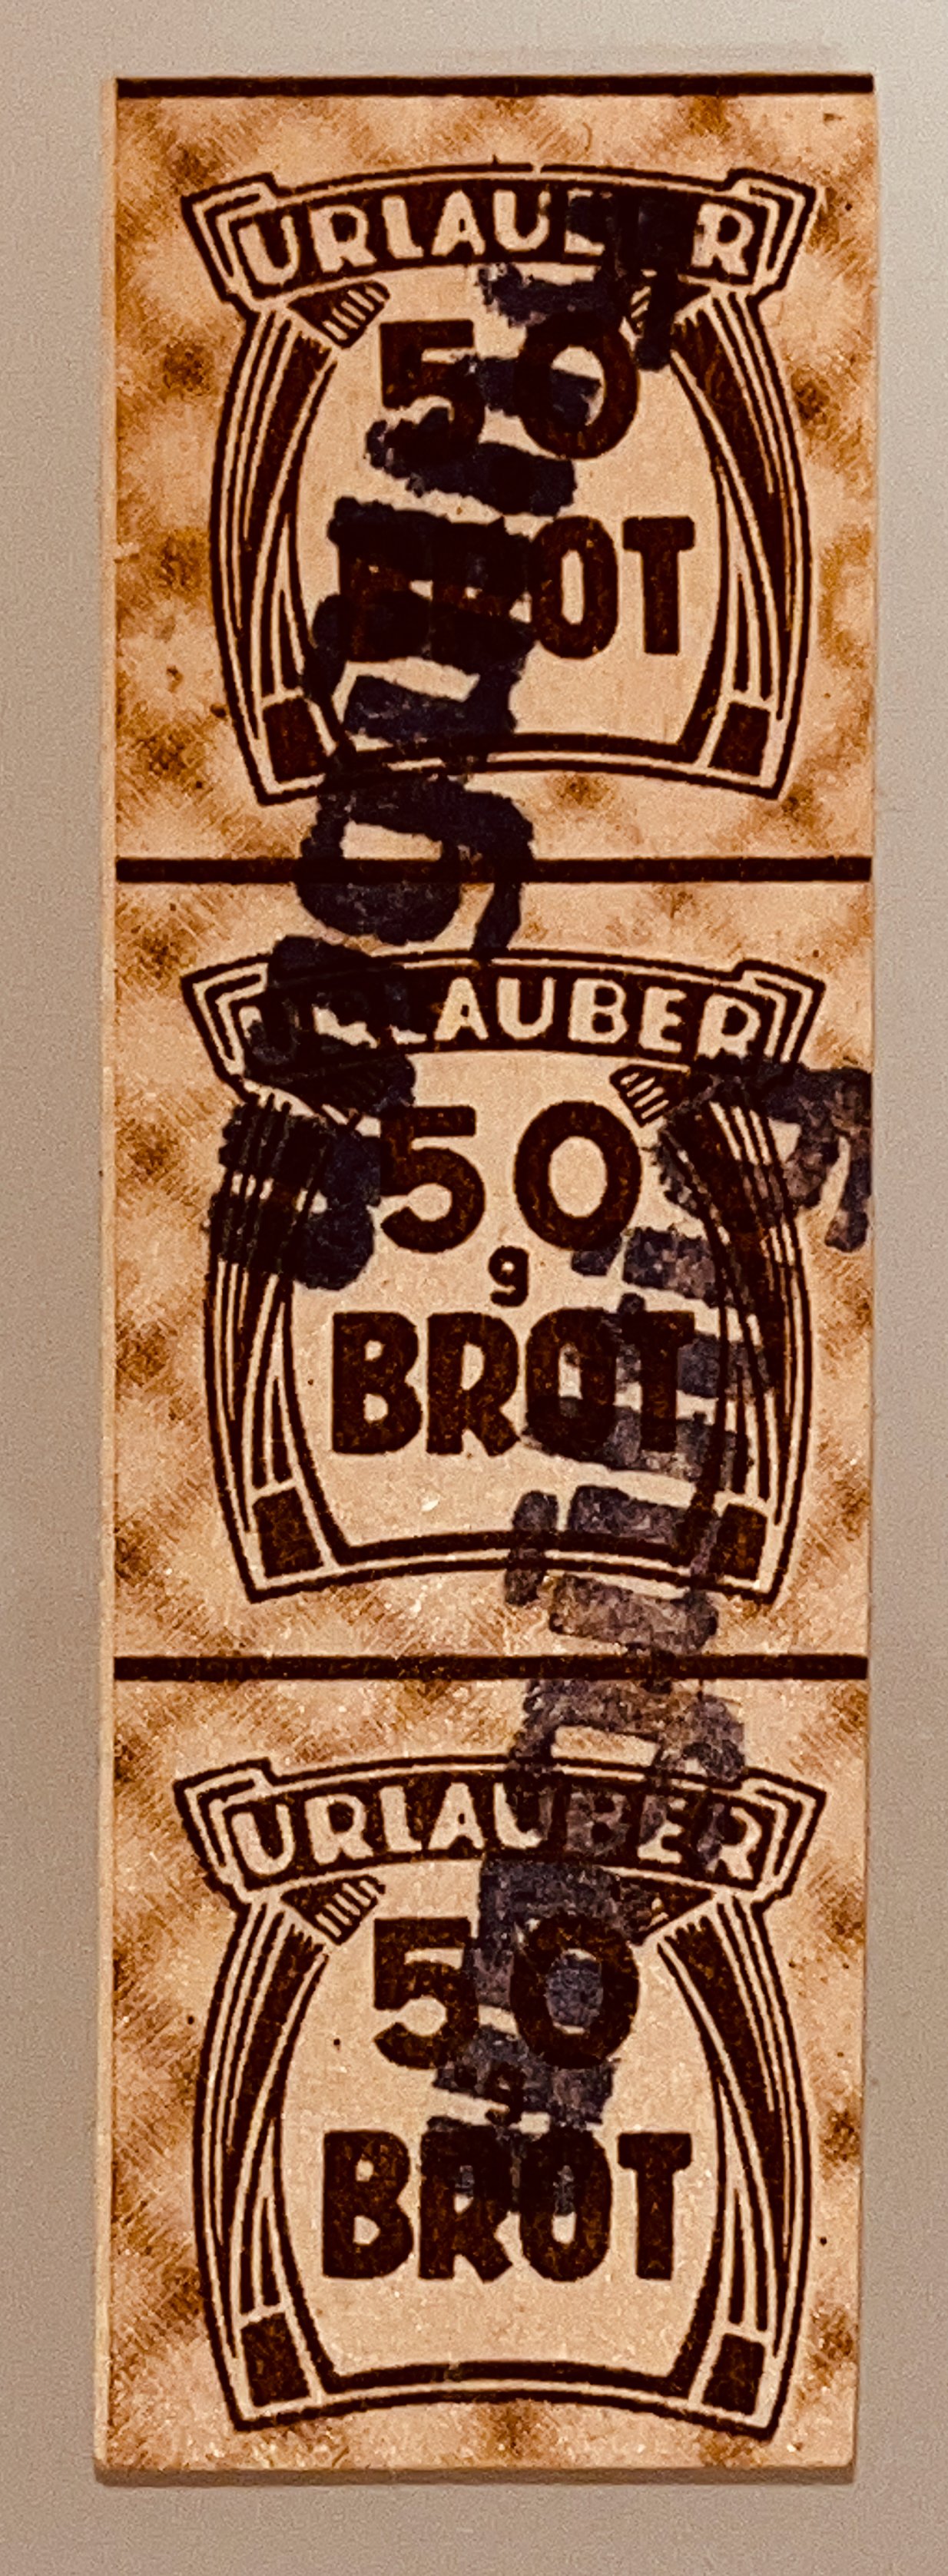 Urlauber-Lebensmittelmarken für 50g Brot (Museumsgesellschaft Bad Dürkheim e. V. CC BY-NC-SA)